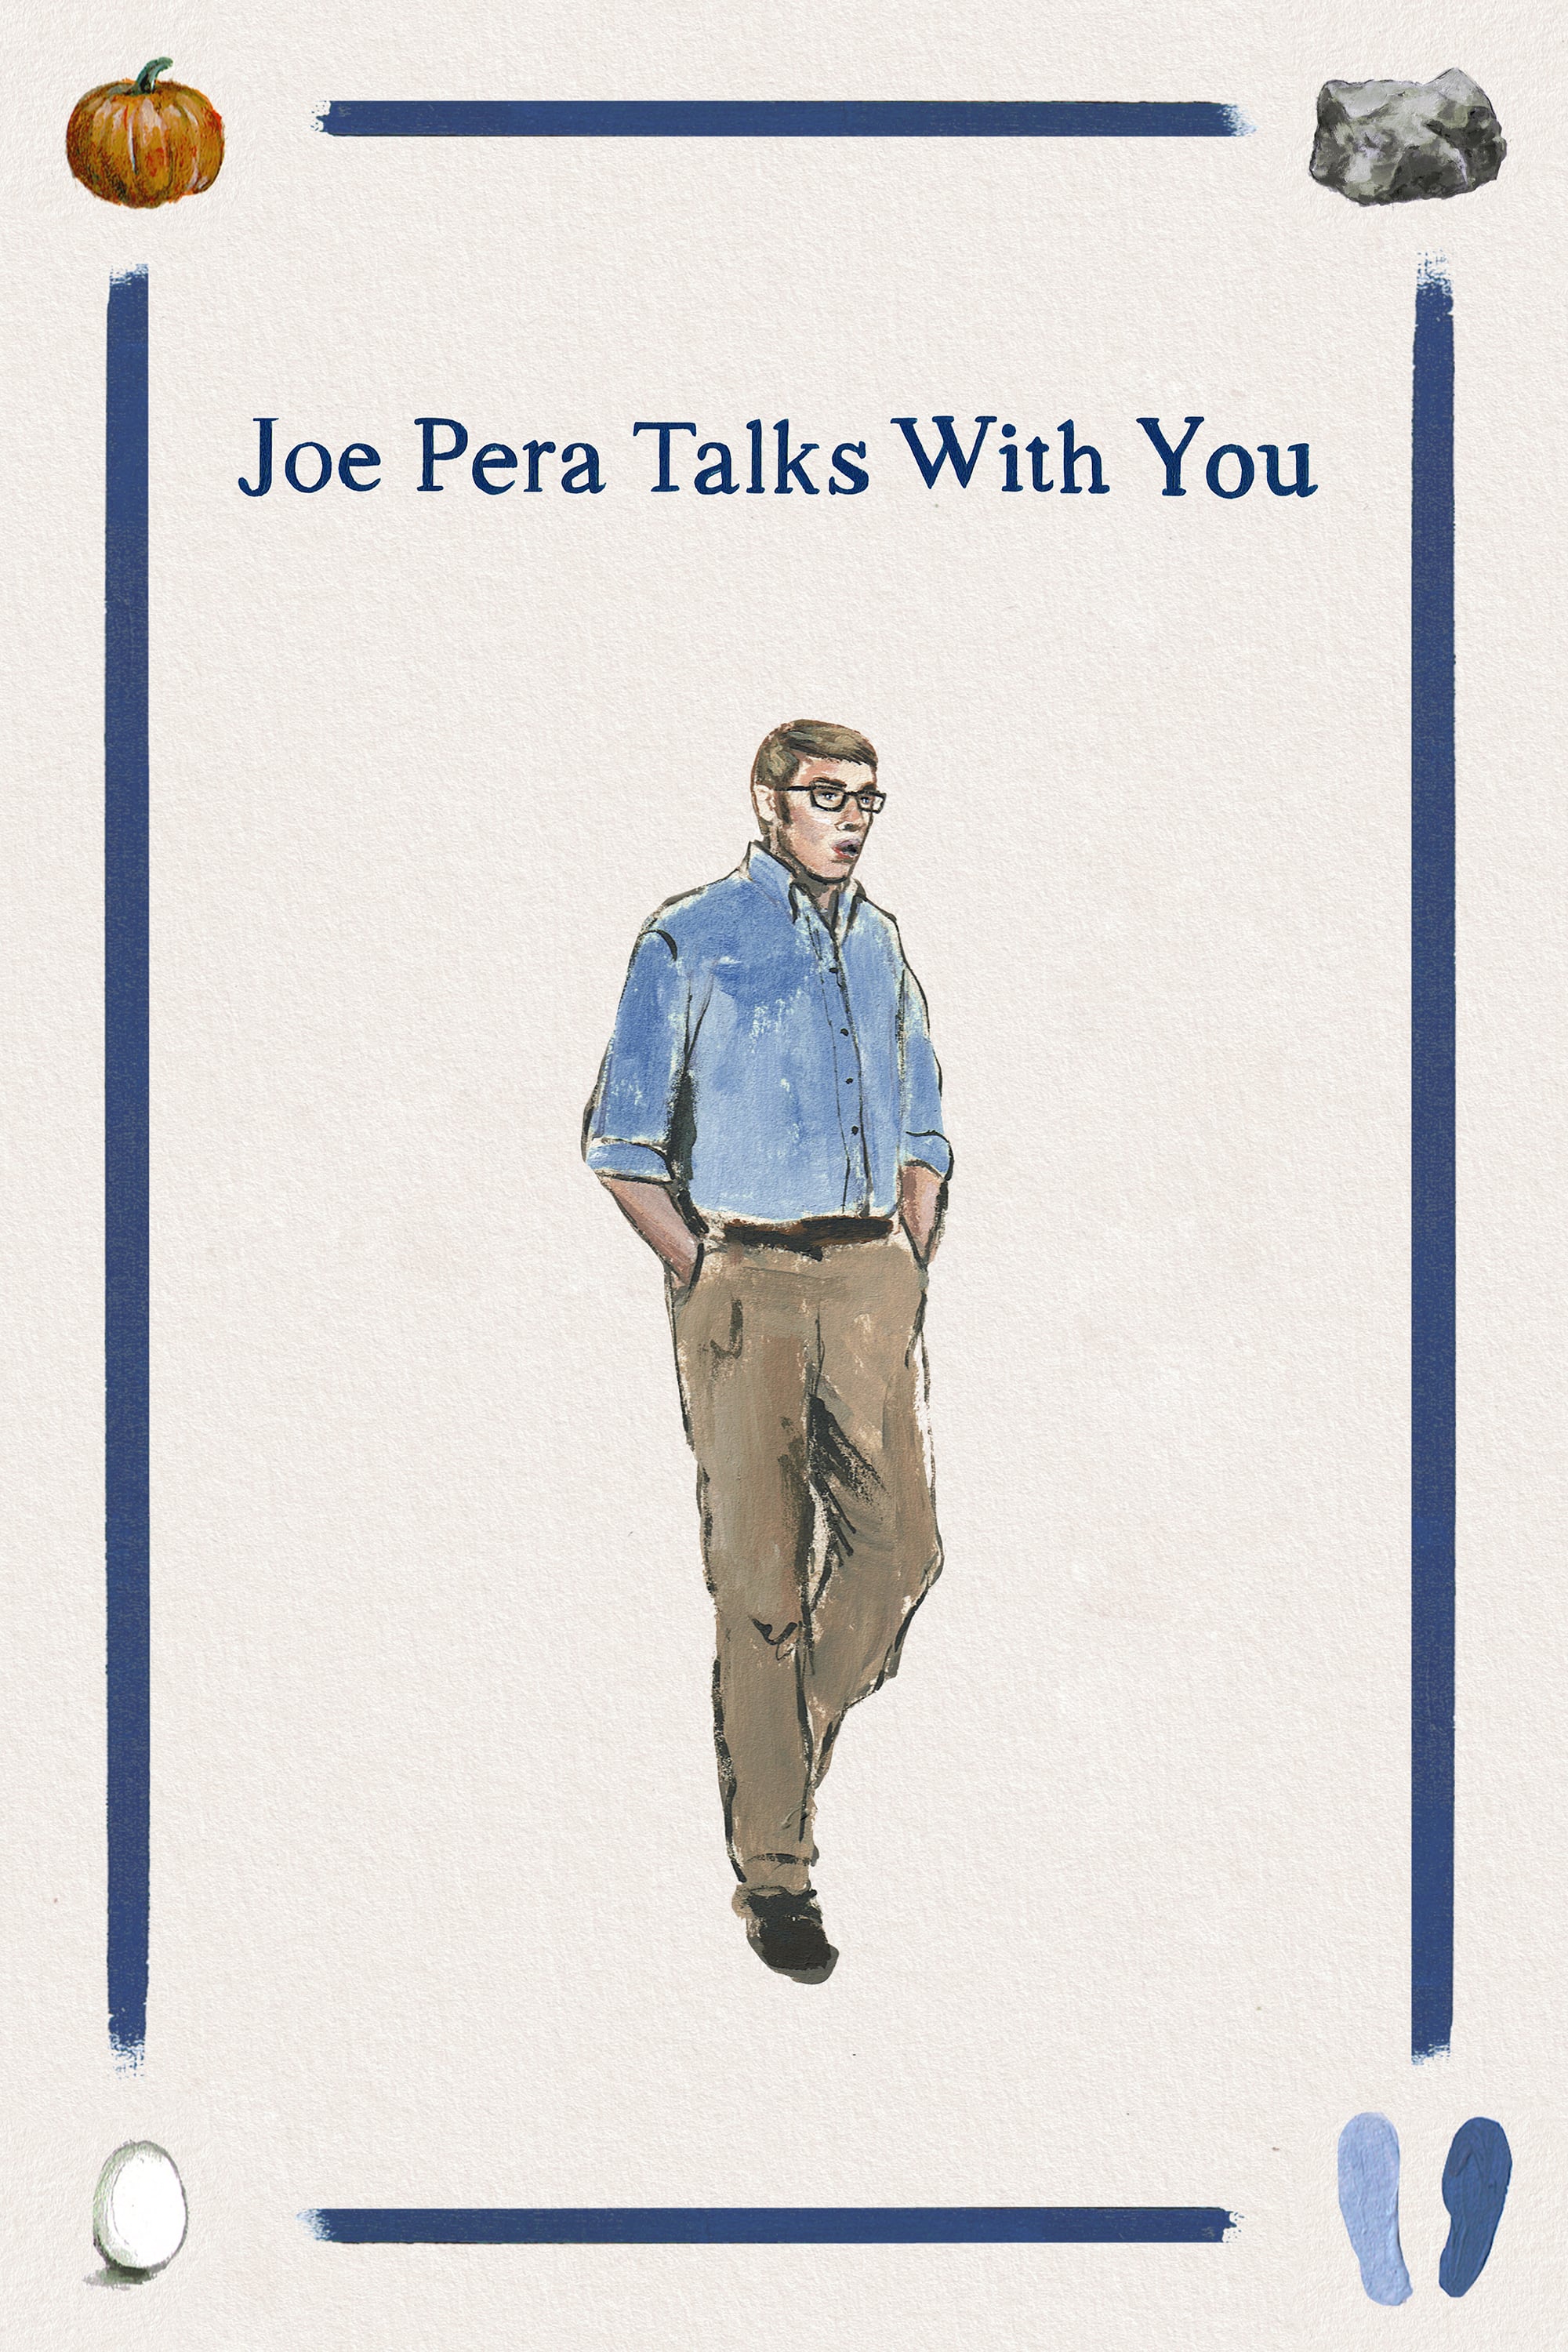 joe pera talks with you season 3 release date